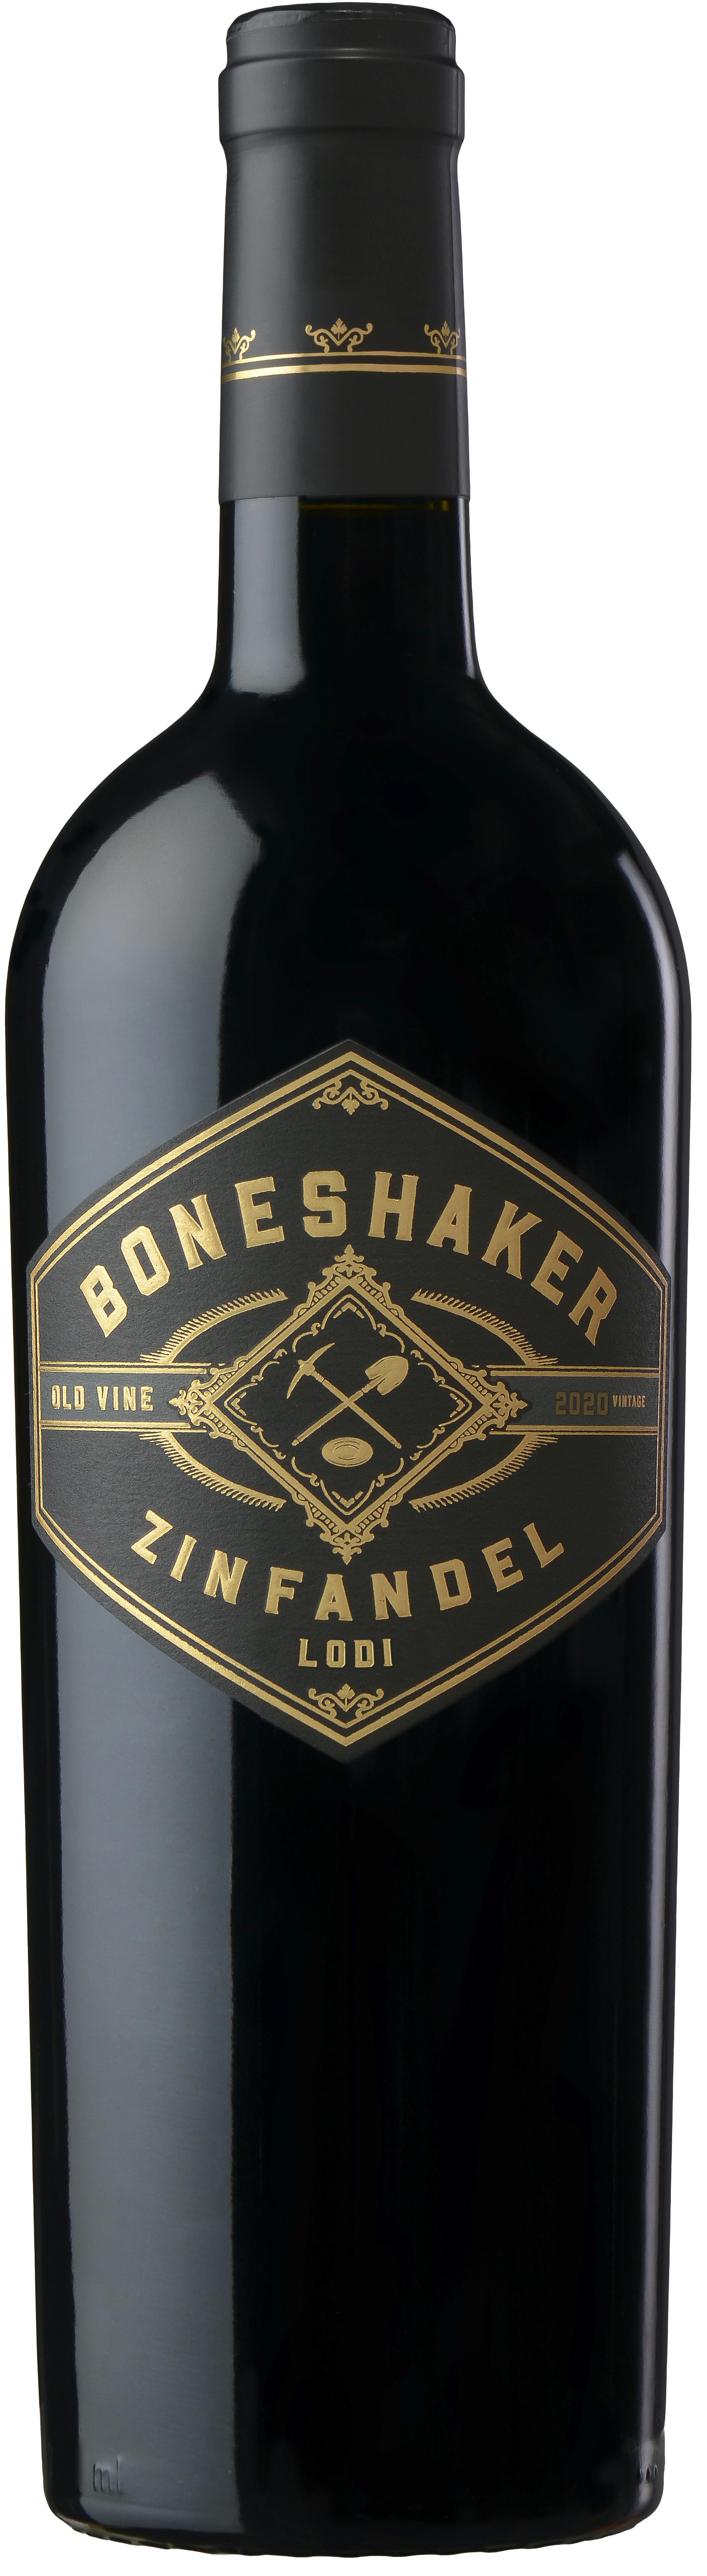 California Lodi Old Vines Zinfandel - The Happy Brewer